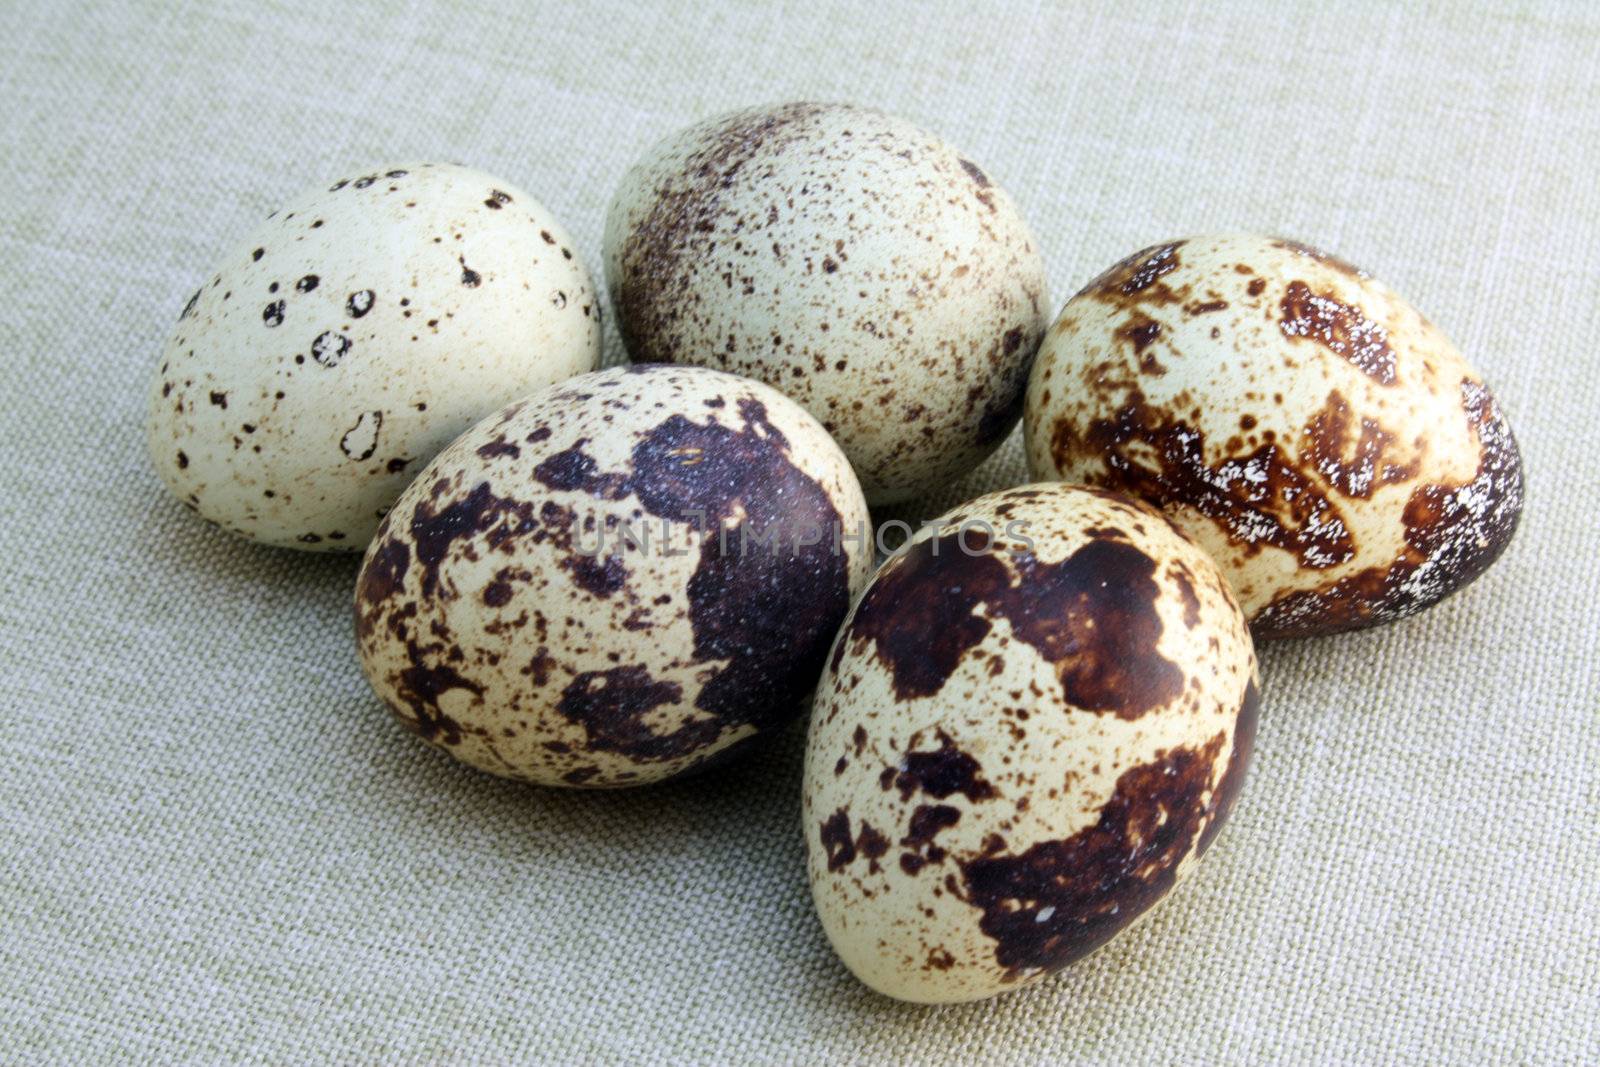 Five quail eggs close-up on linen background